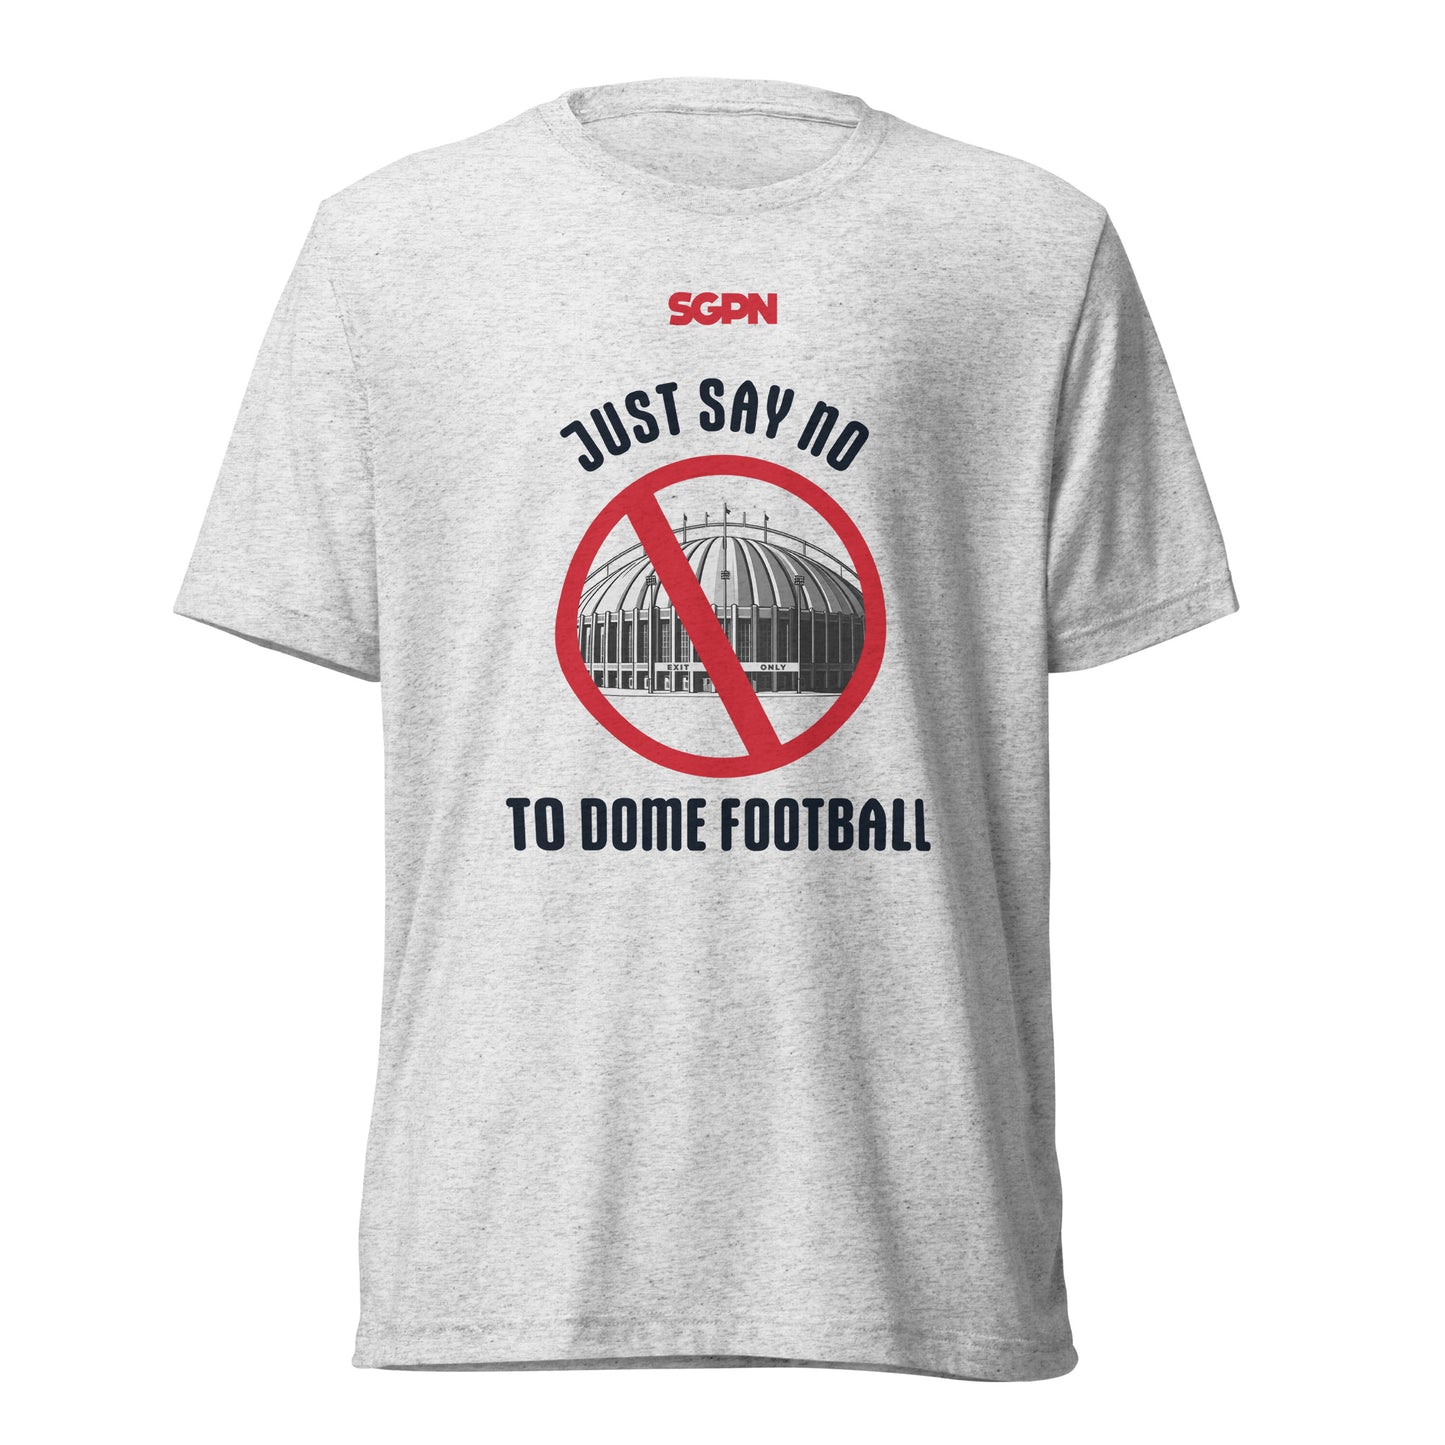 Just Say No To Dome Football - Short sleeve t-shirt